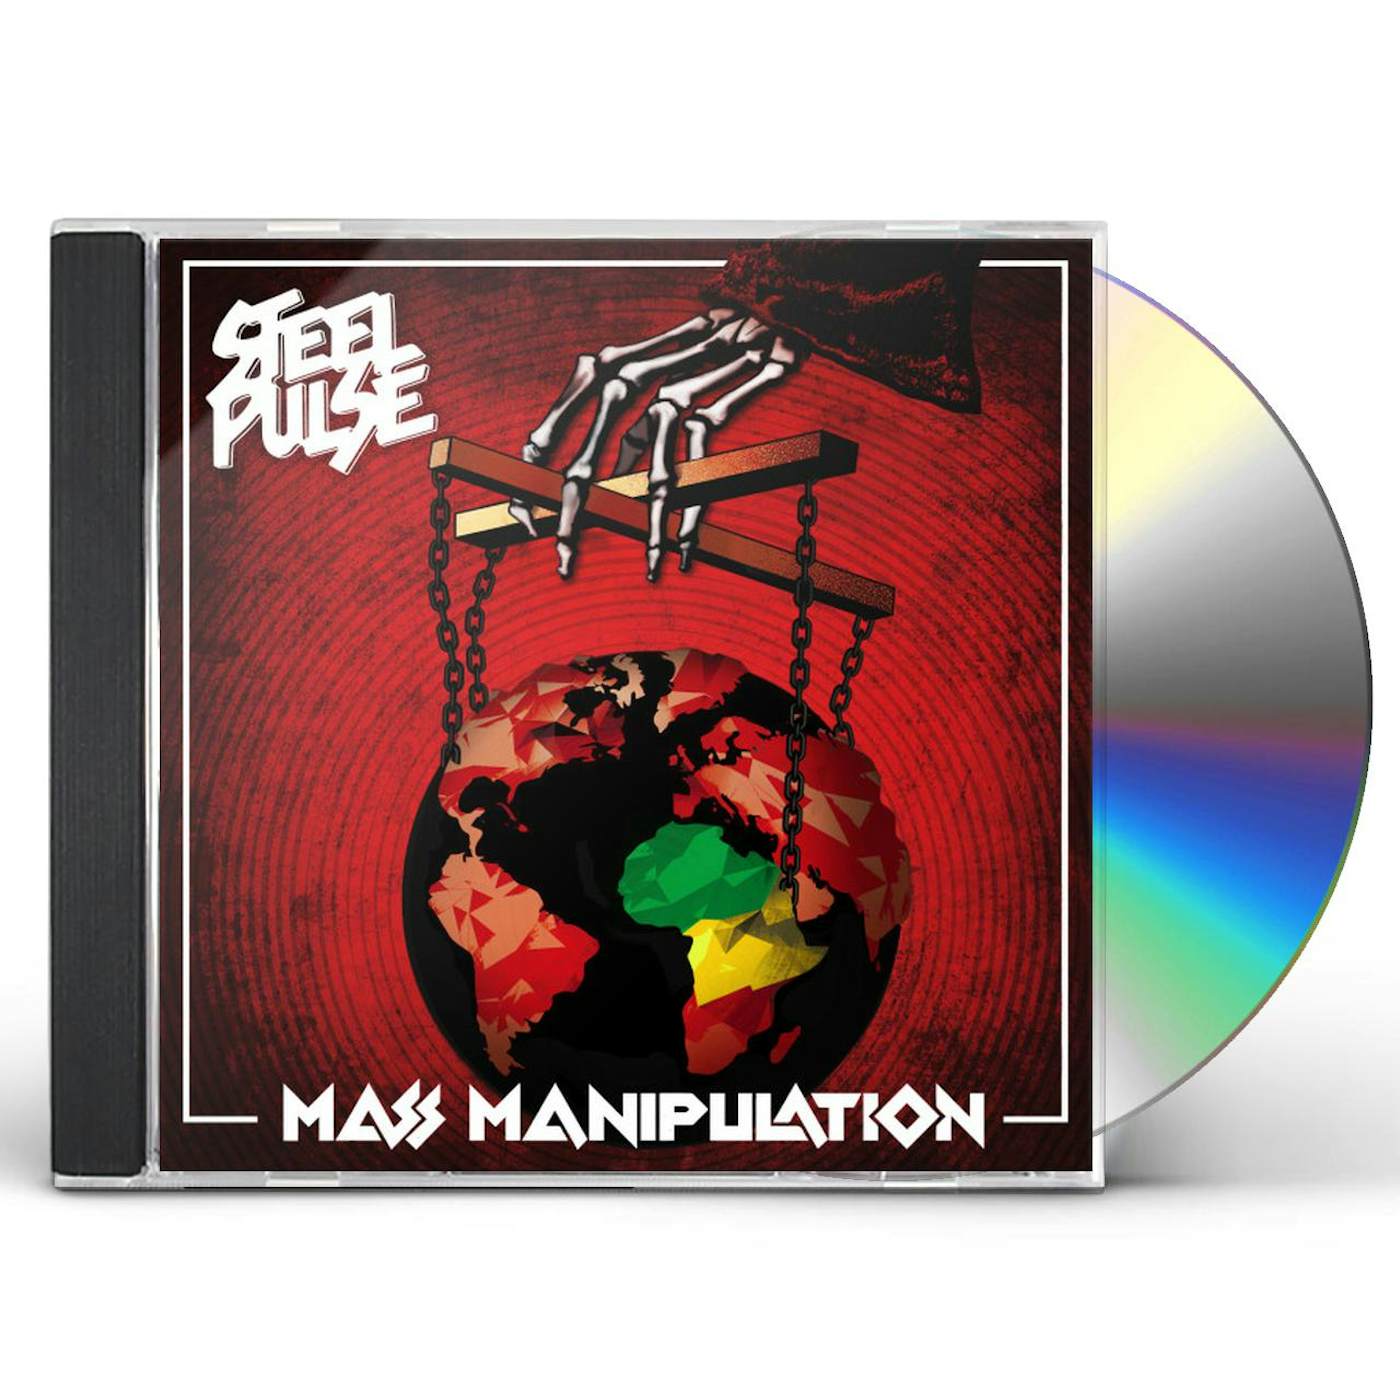 Steel Pulse MASS MANIPULATION CD